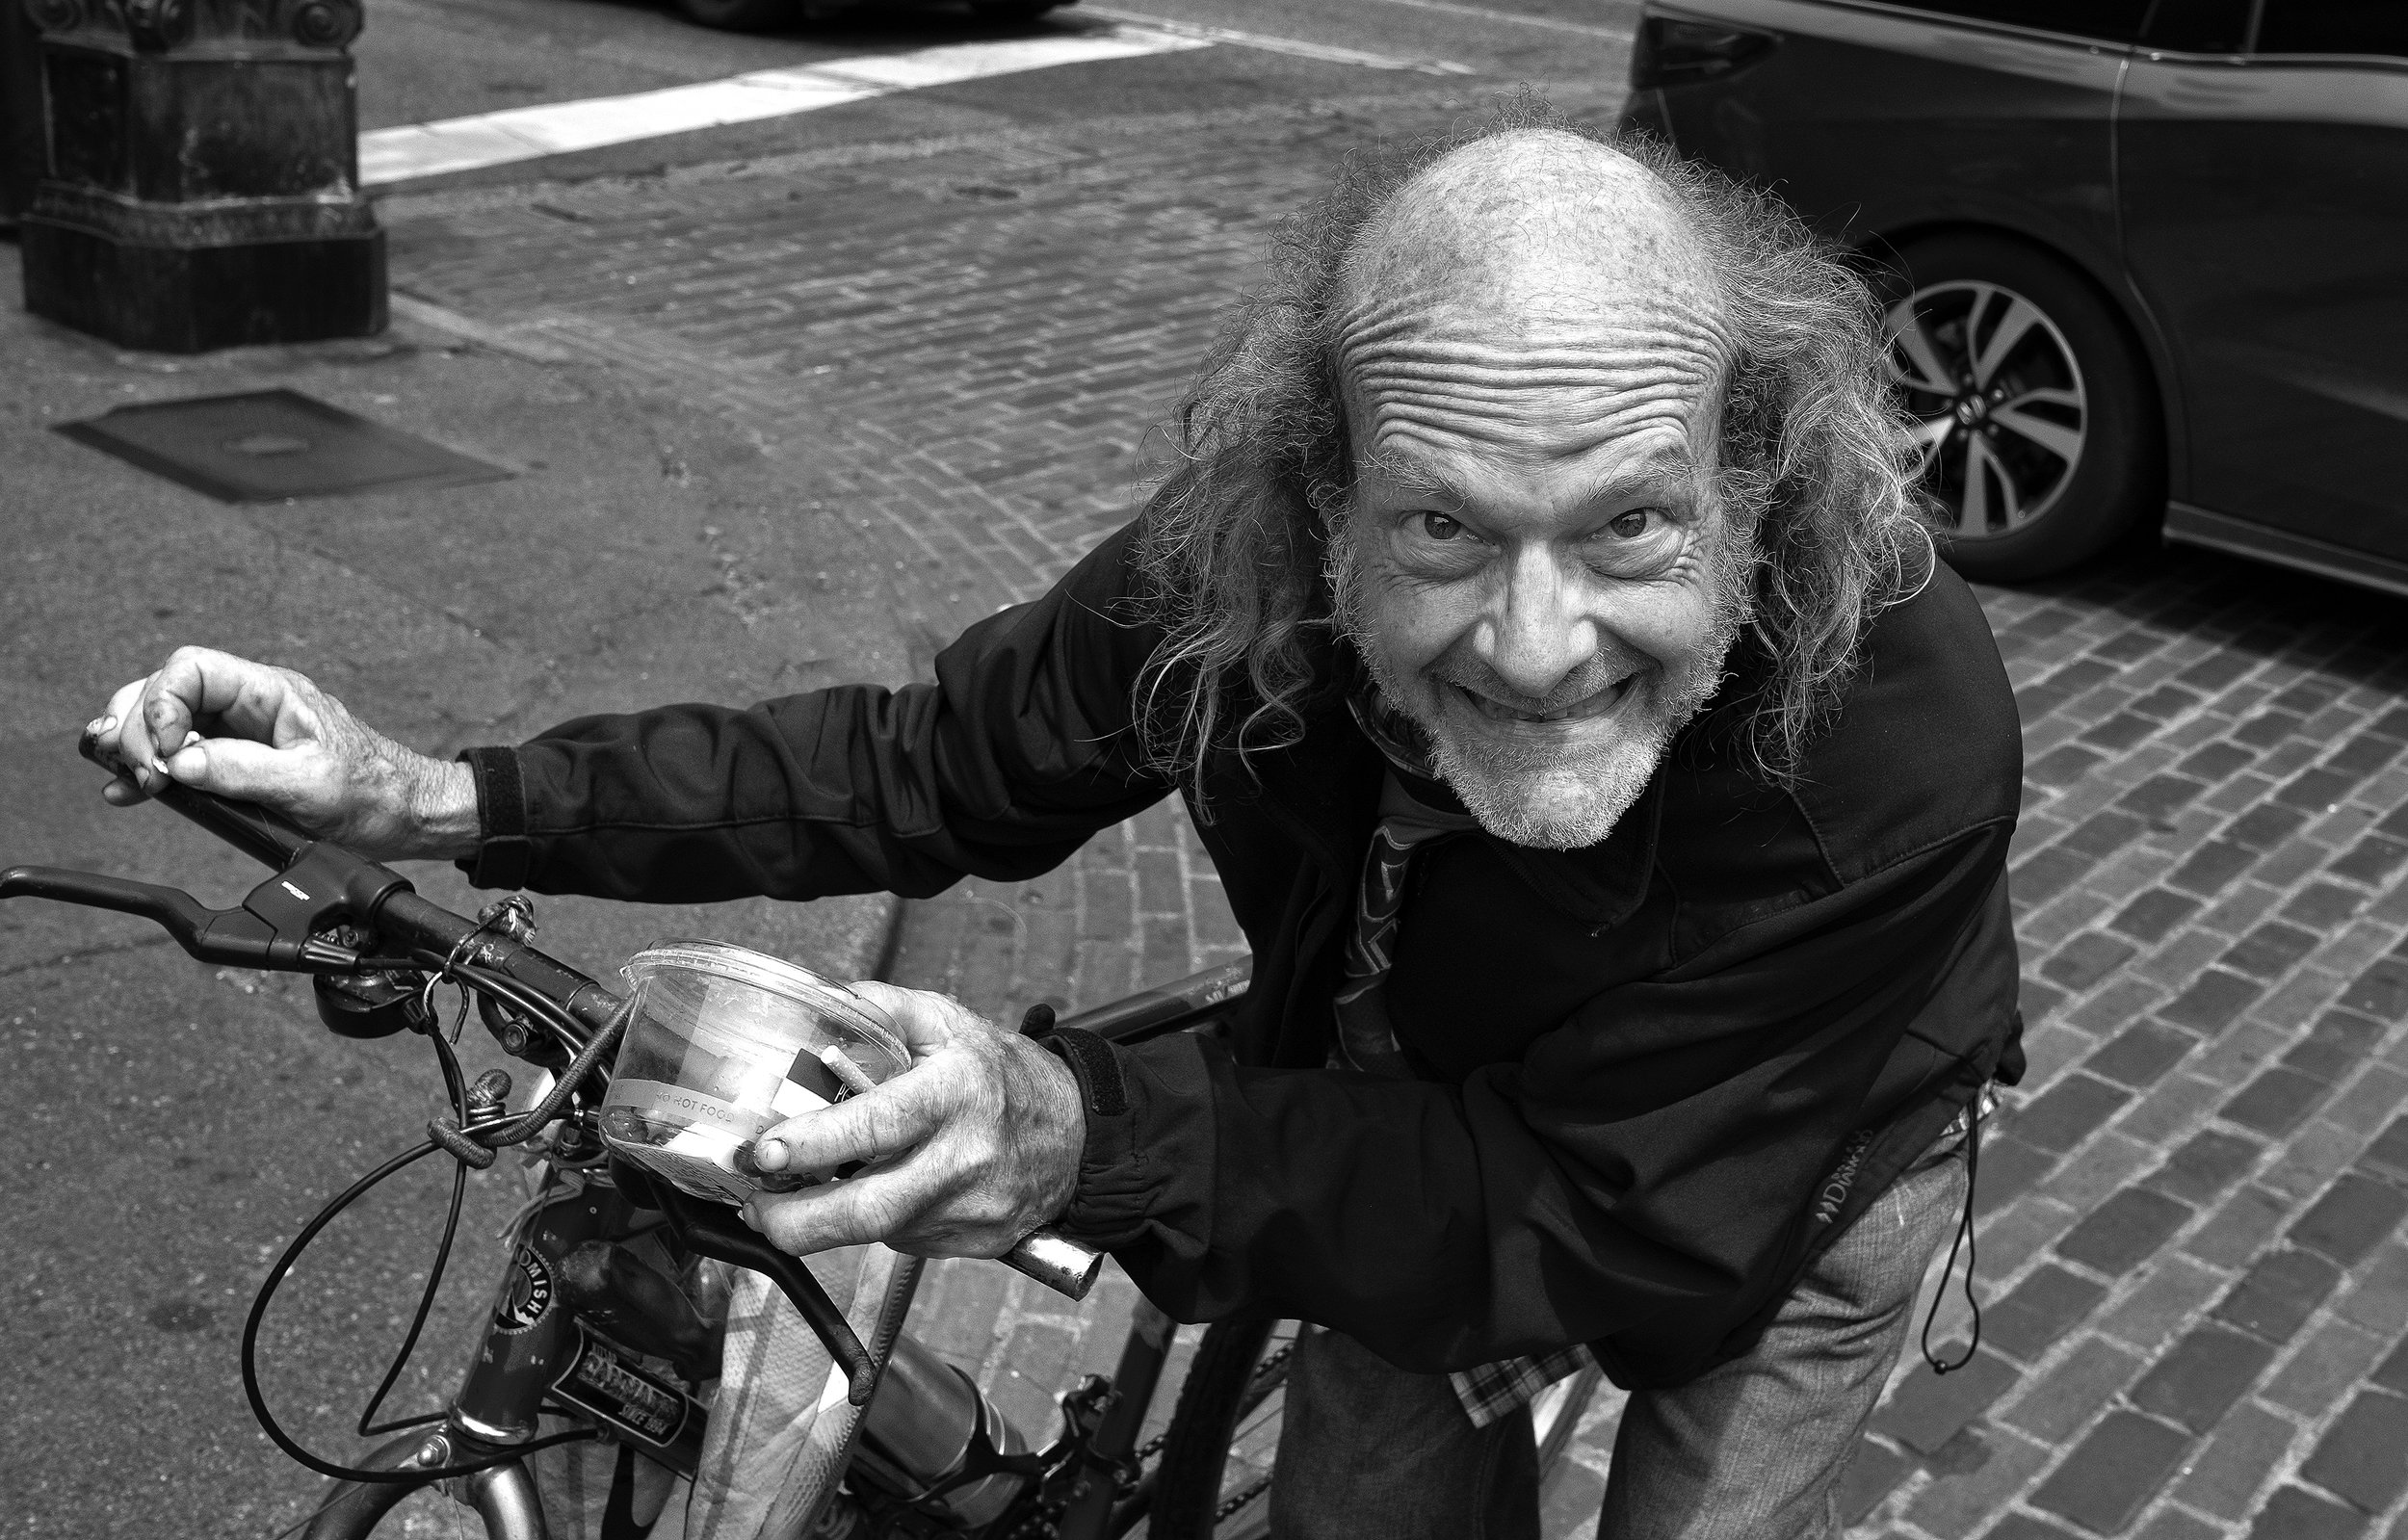 Old man with bike.jpg